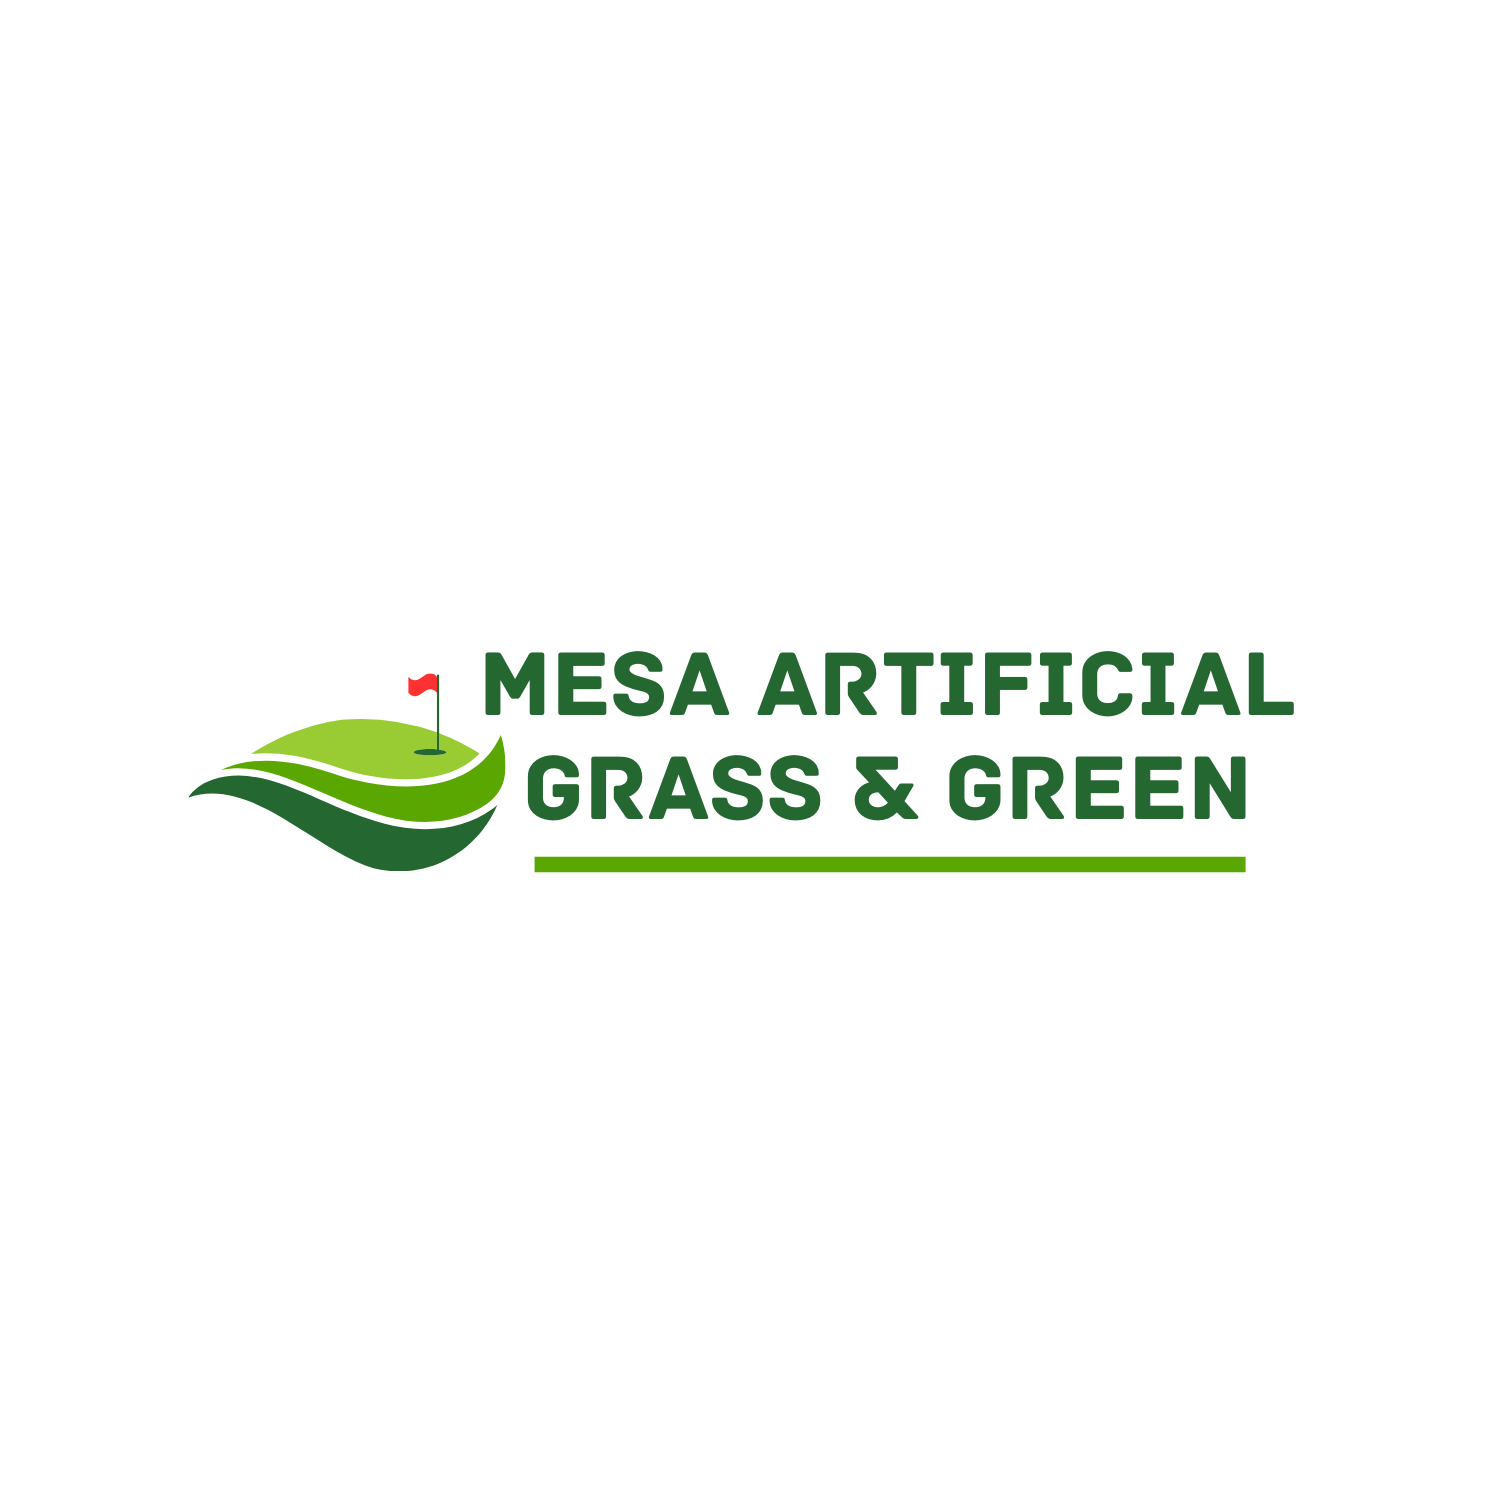 Mesa-Artificial-Grass-Green-Logo-Square.png